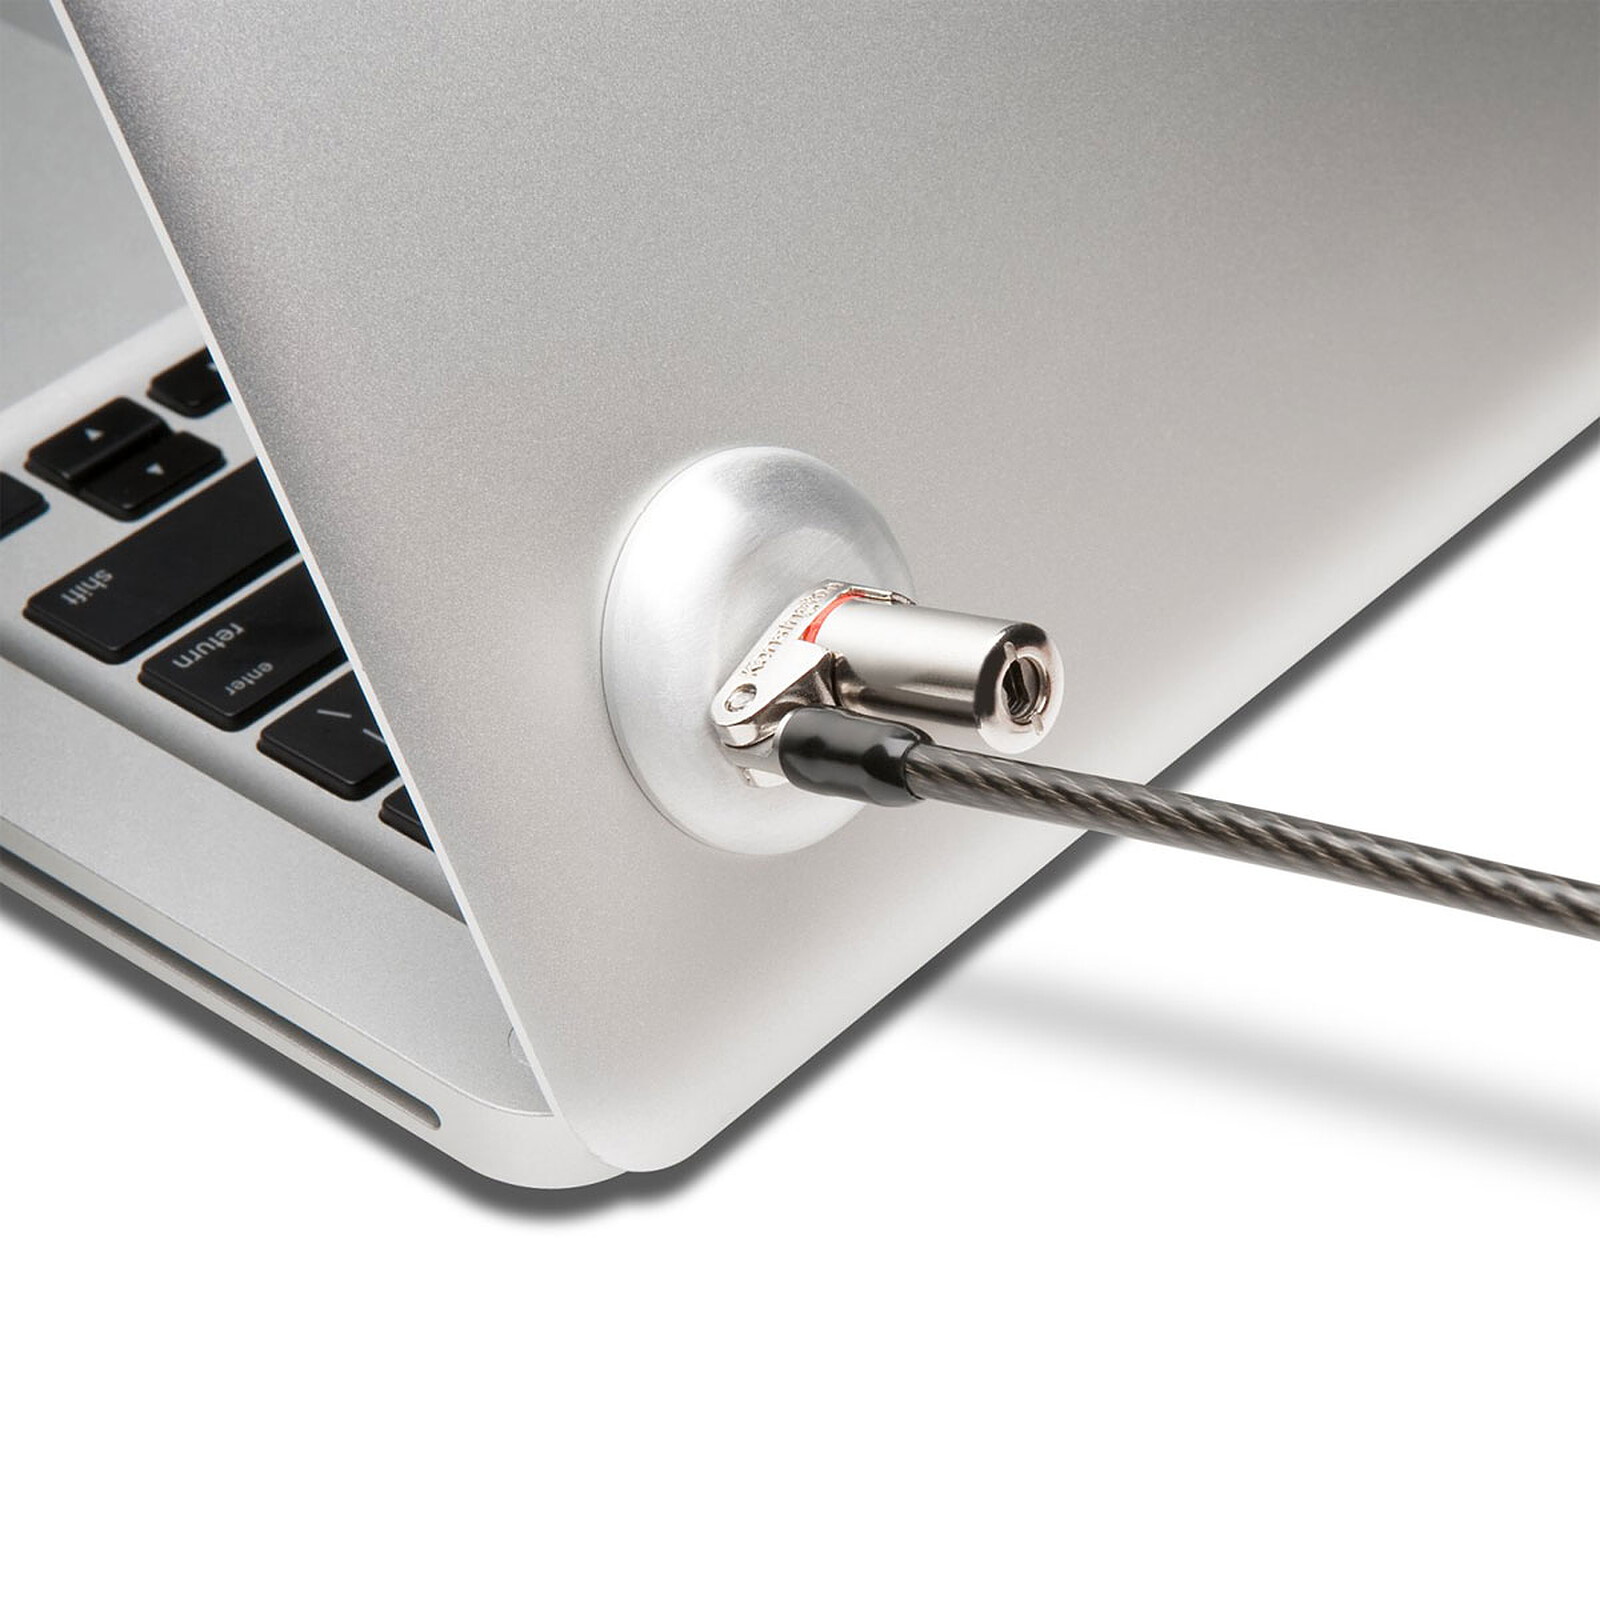 Maclocks The Ledge (MacBook Pro TB) - Accessoires PC portable